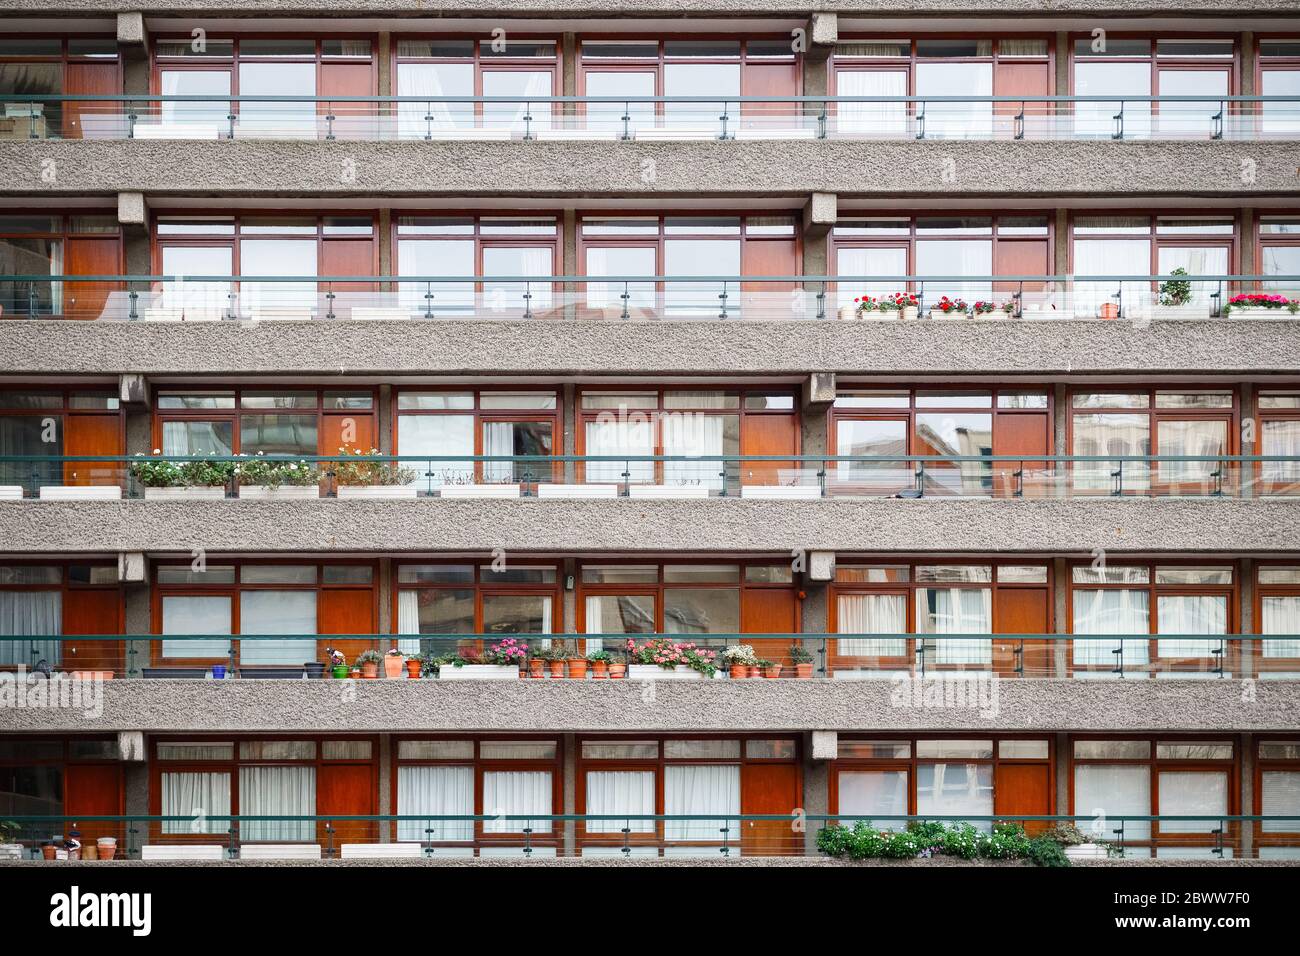 Facade of Barbican Estate, a residential block in London, UK Stock Photo